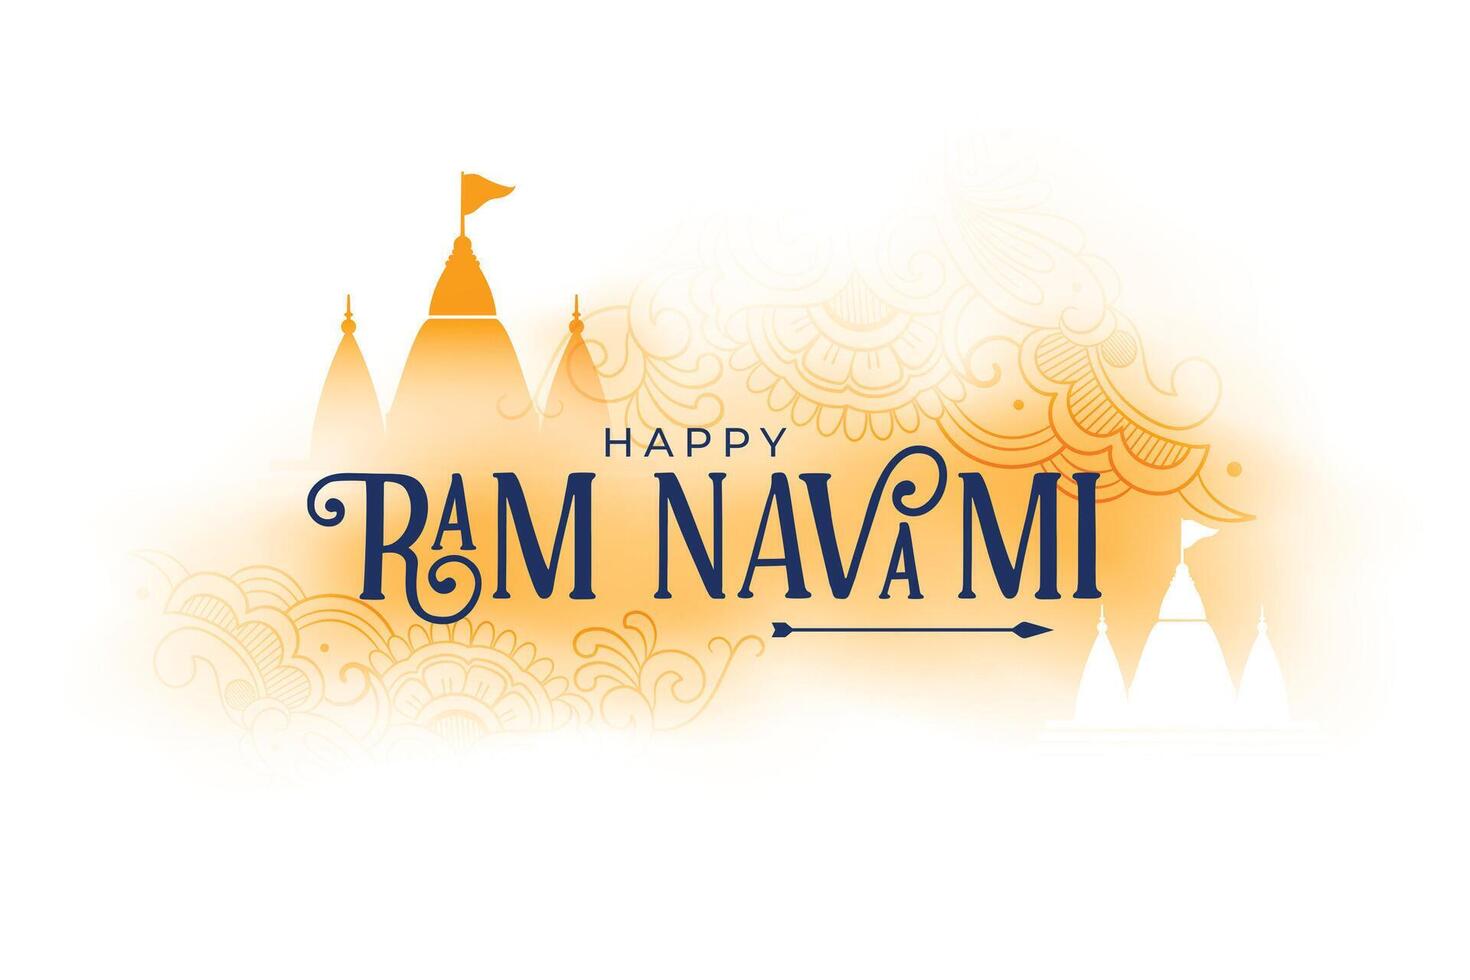 señor RAM navami festival deseos bendición tarjeta con templos vector